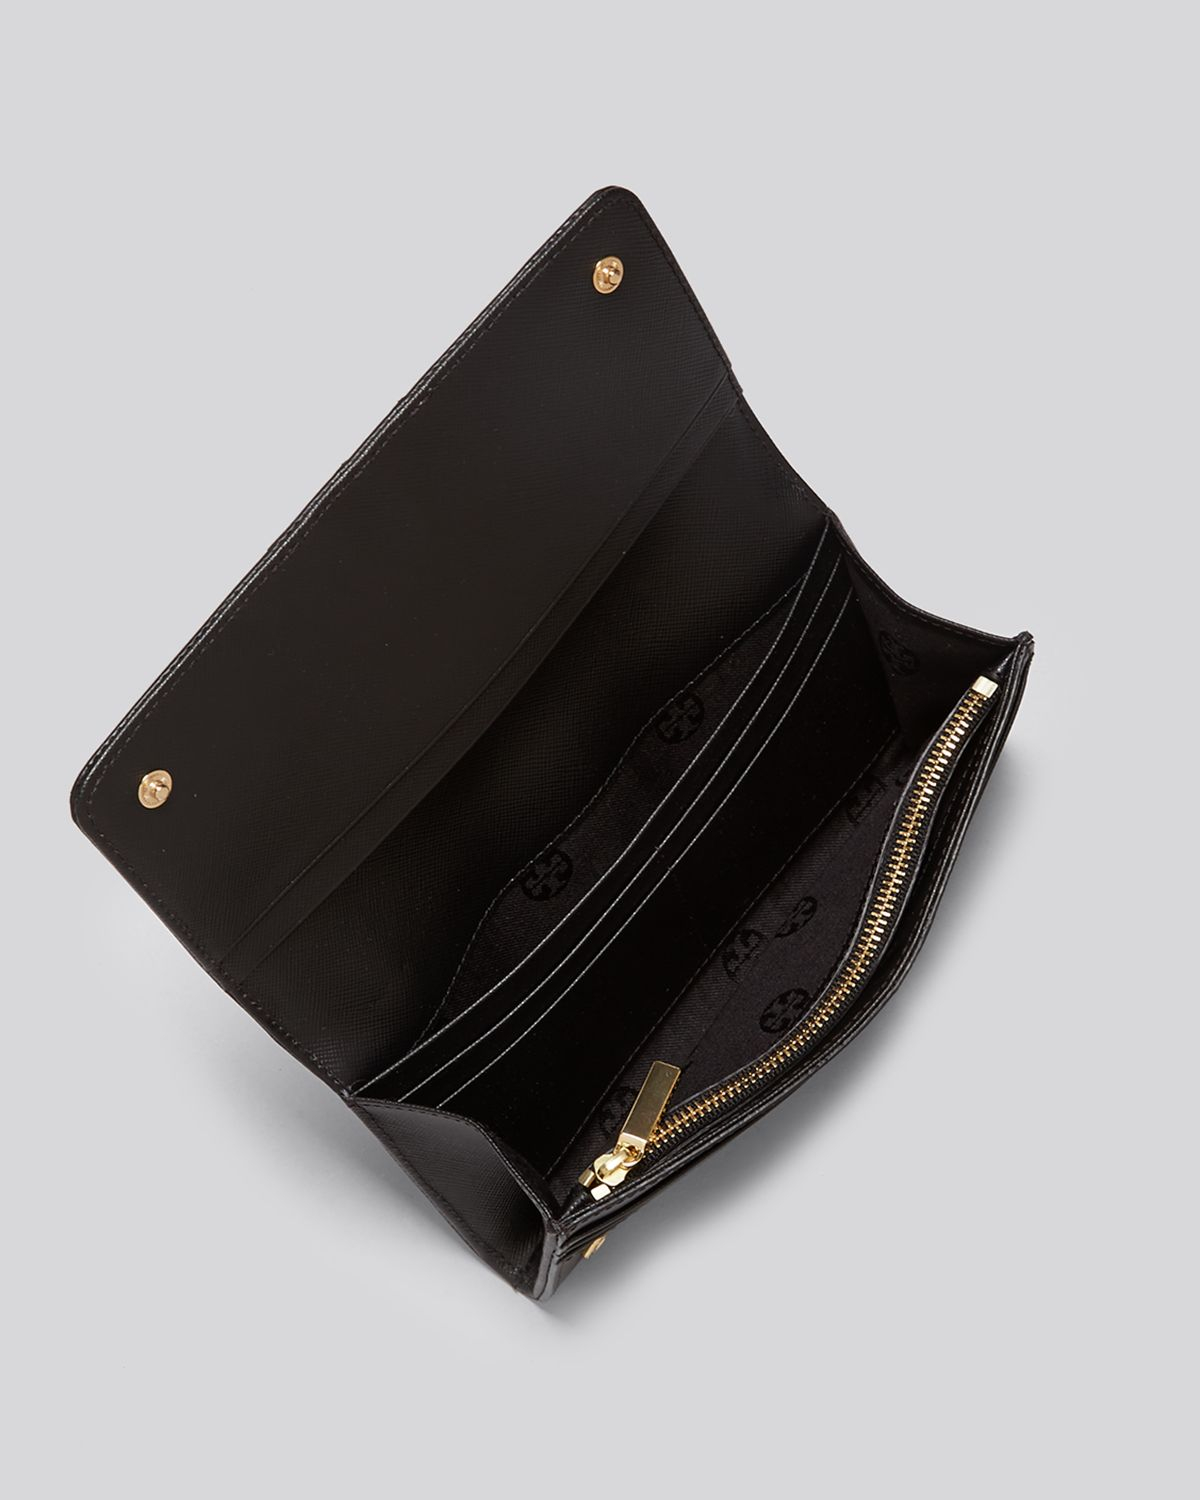 Tory burch Wallet - Robinson Stripe Envelope Continental in Black | Lyst